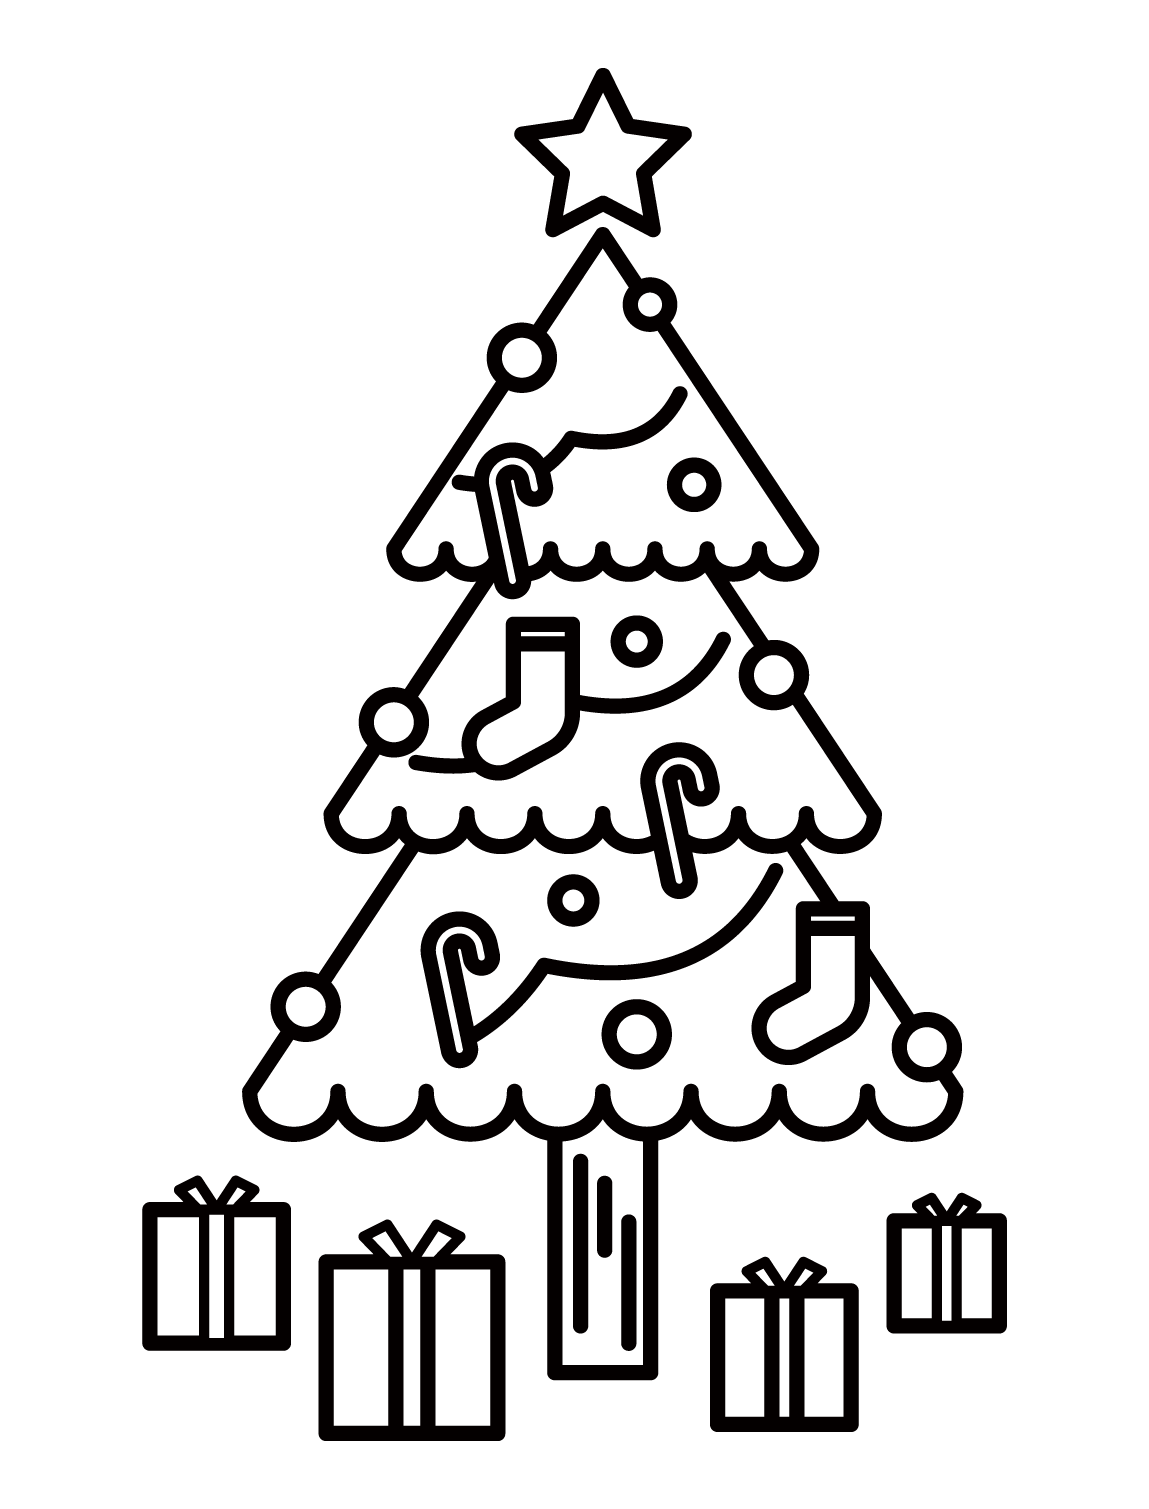 Illustrations of Christmas trees